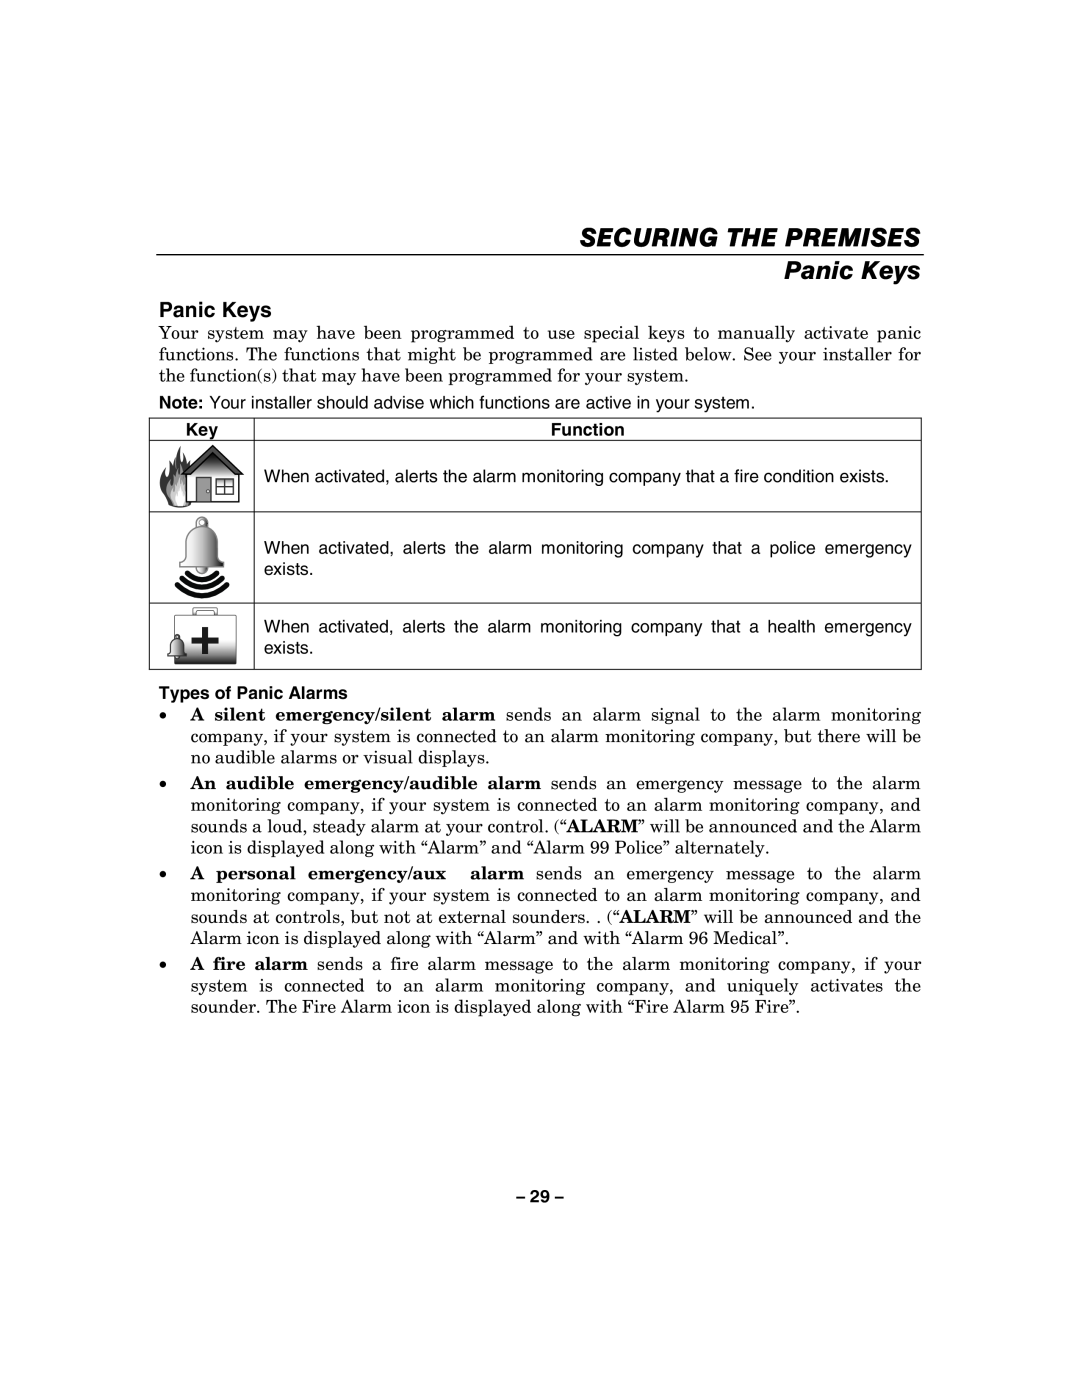 Honeywell 800-06894 manual SECURING THE PREMISES Panic Keys, Function, Types of Panic Alarms 